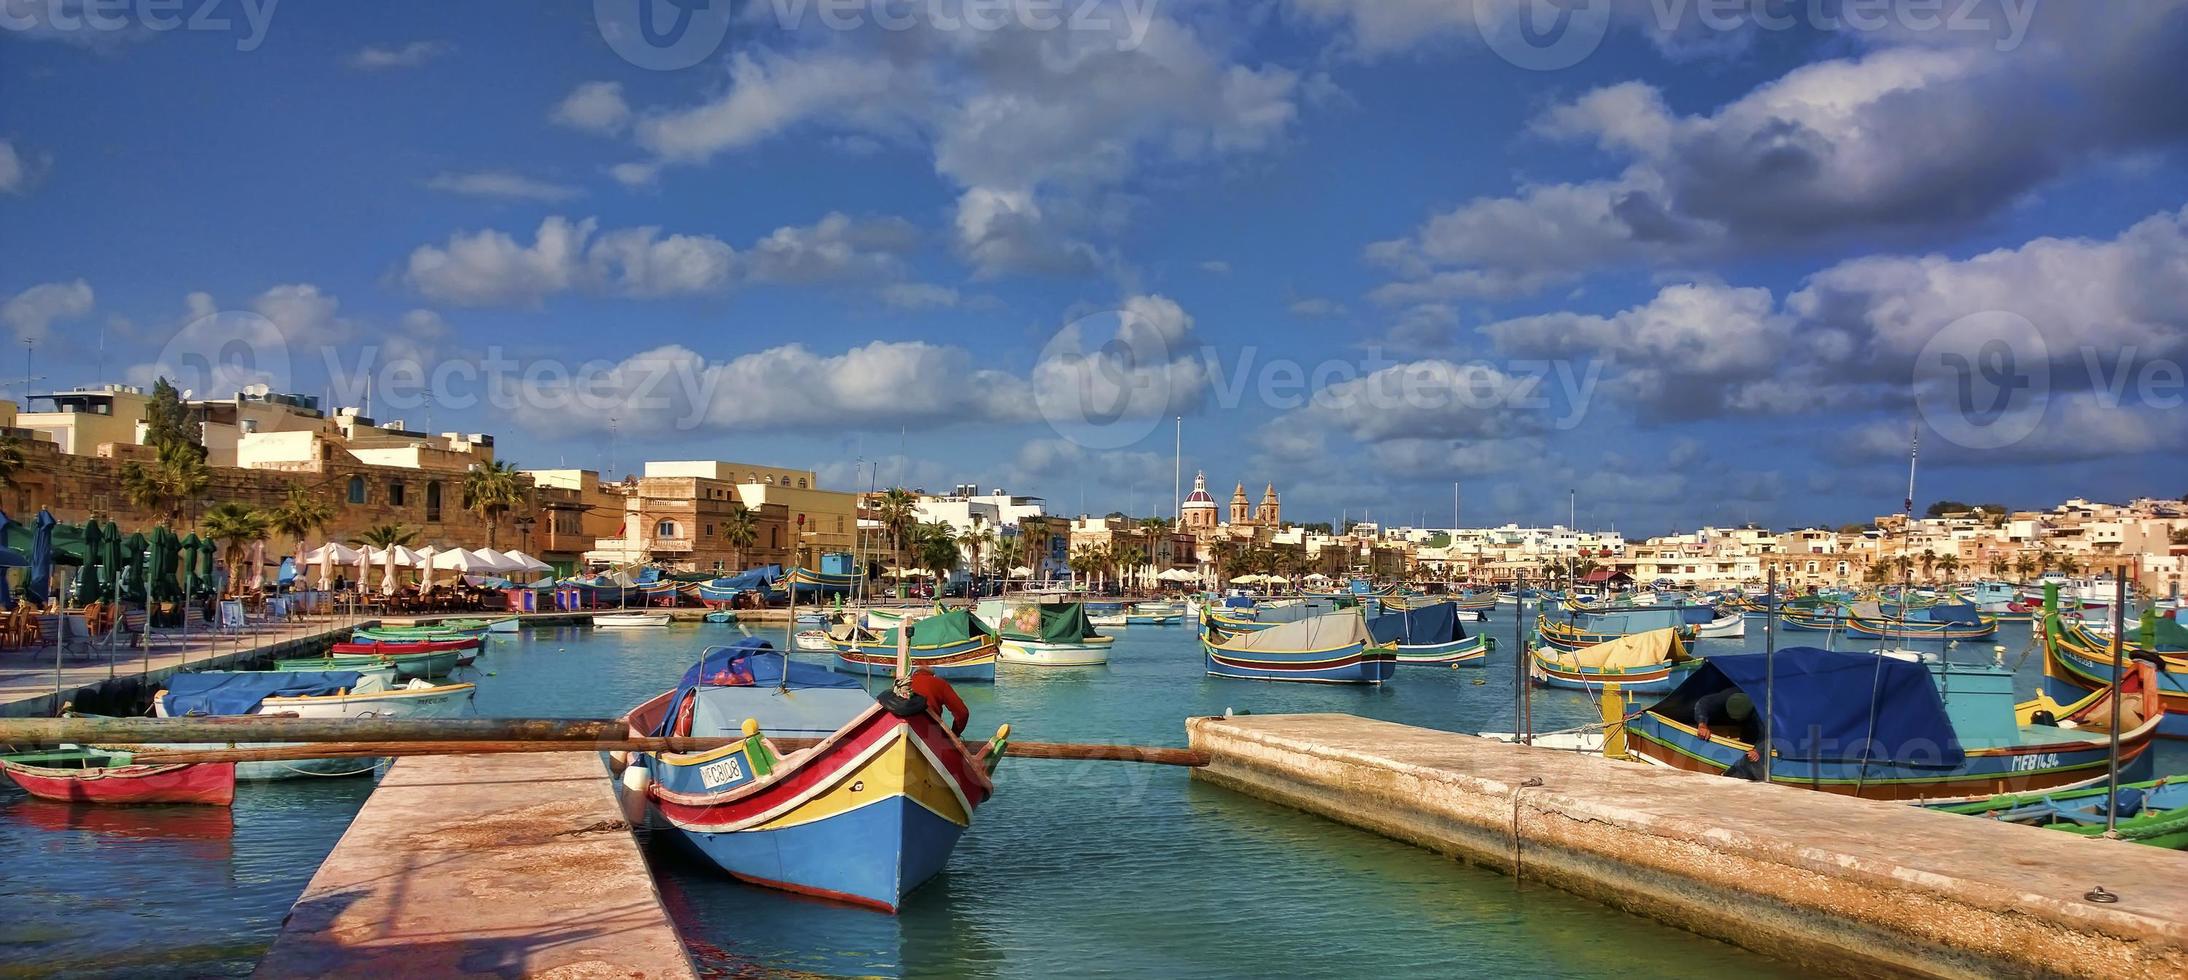 Port de marsaxlokk à Malte photo